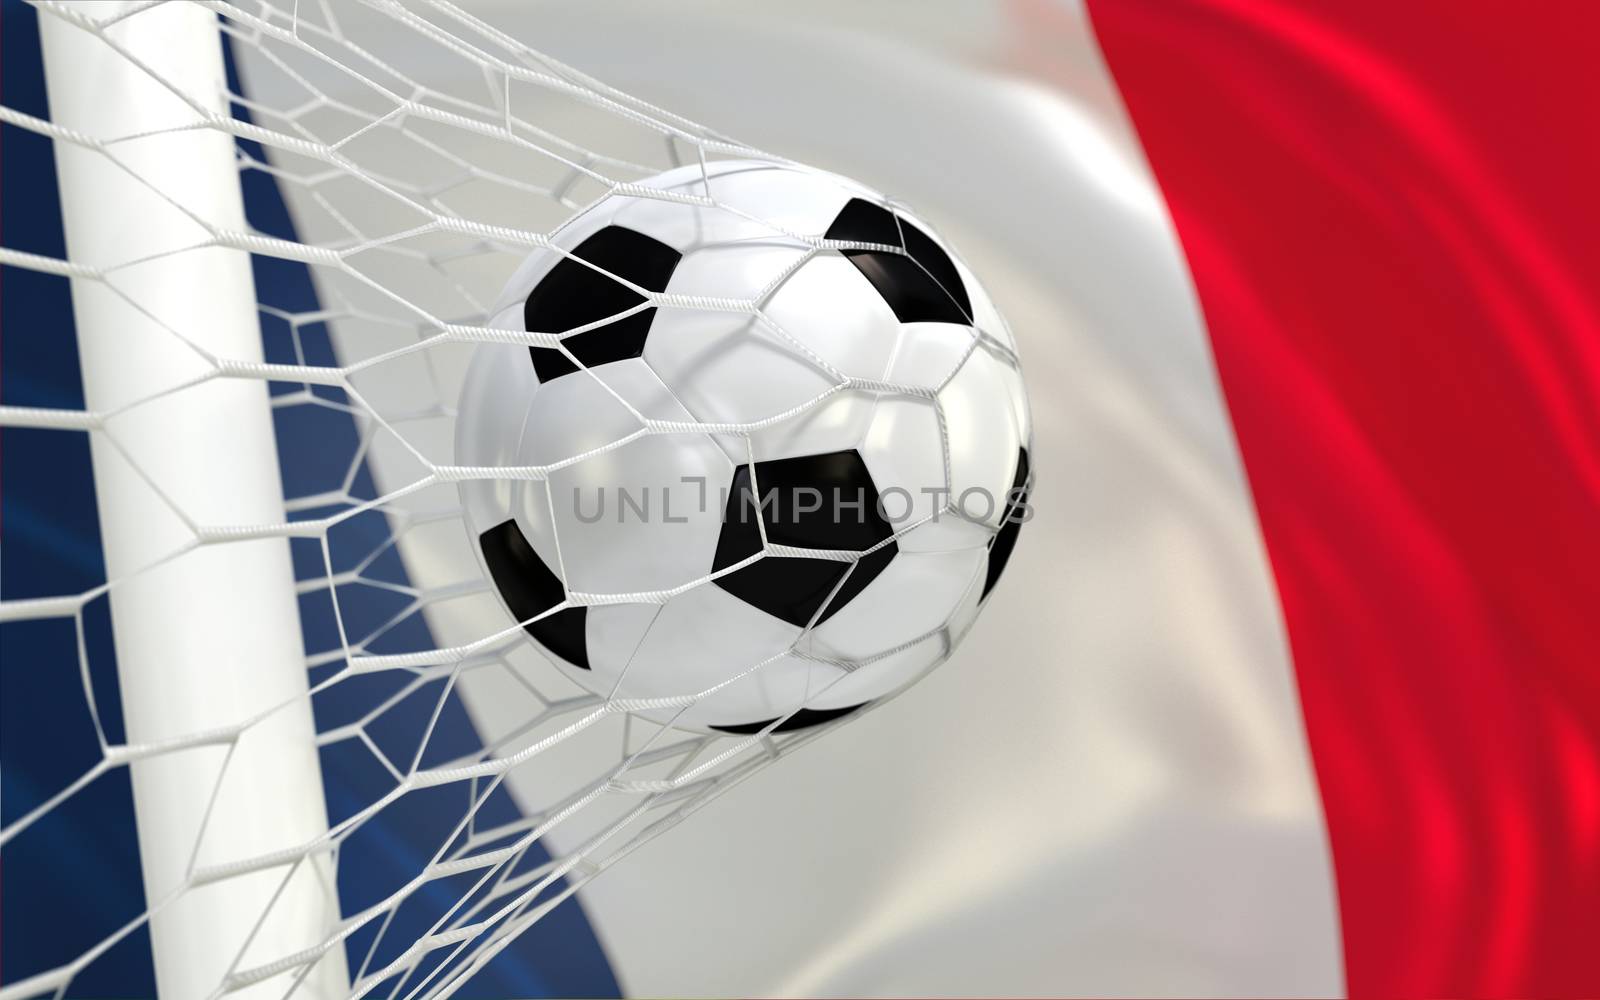 France waving flag and soccer ball in goal net by Barbraford